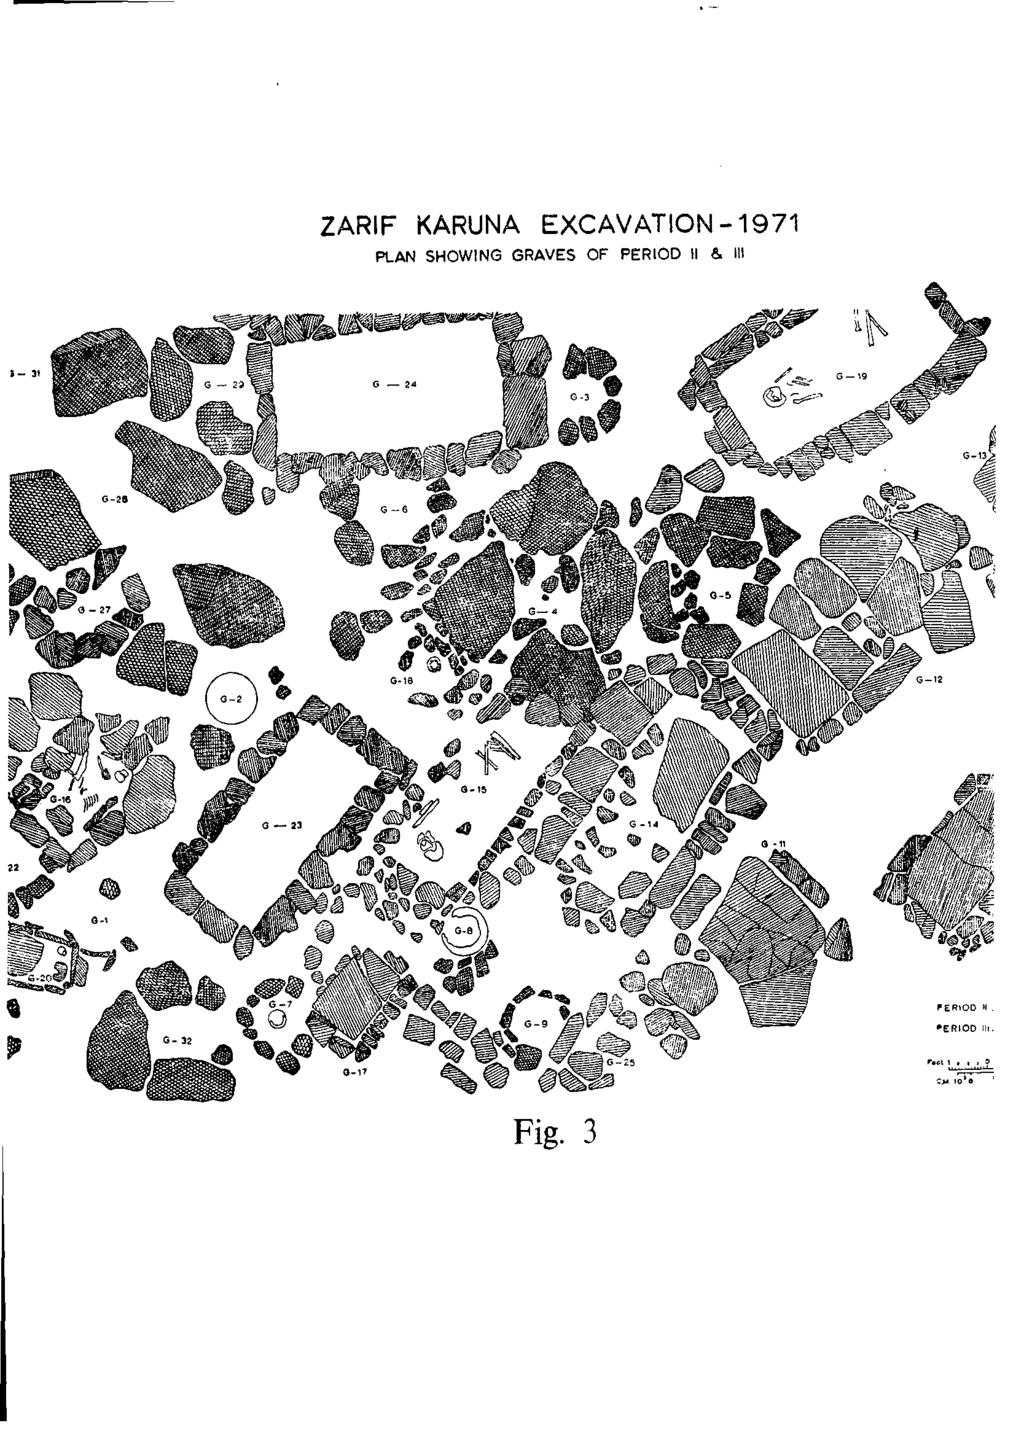 ZARIF KARUNA EXCAVATION -1971 PLAN SHOWING GRAVES OF